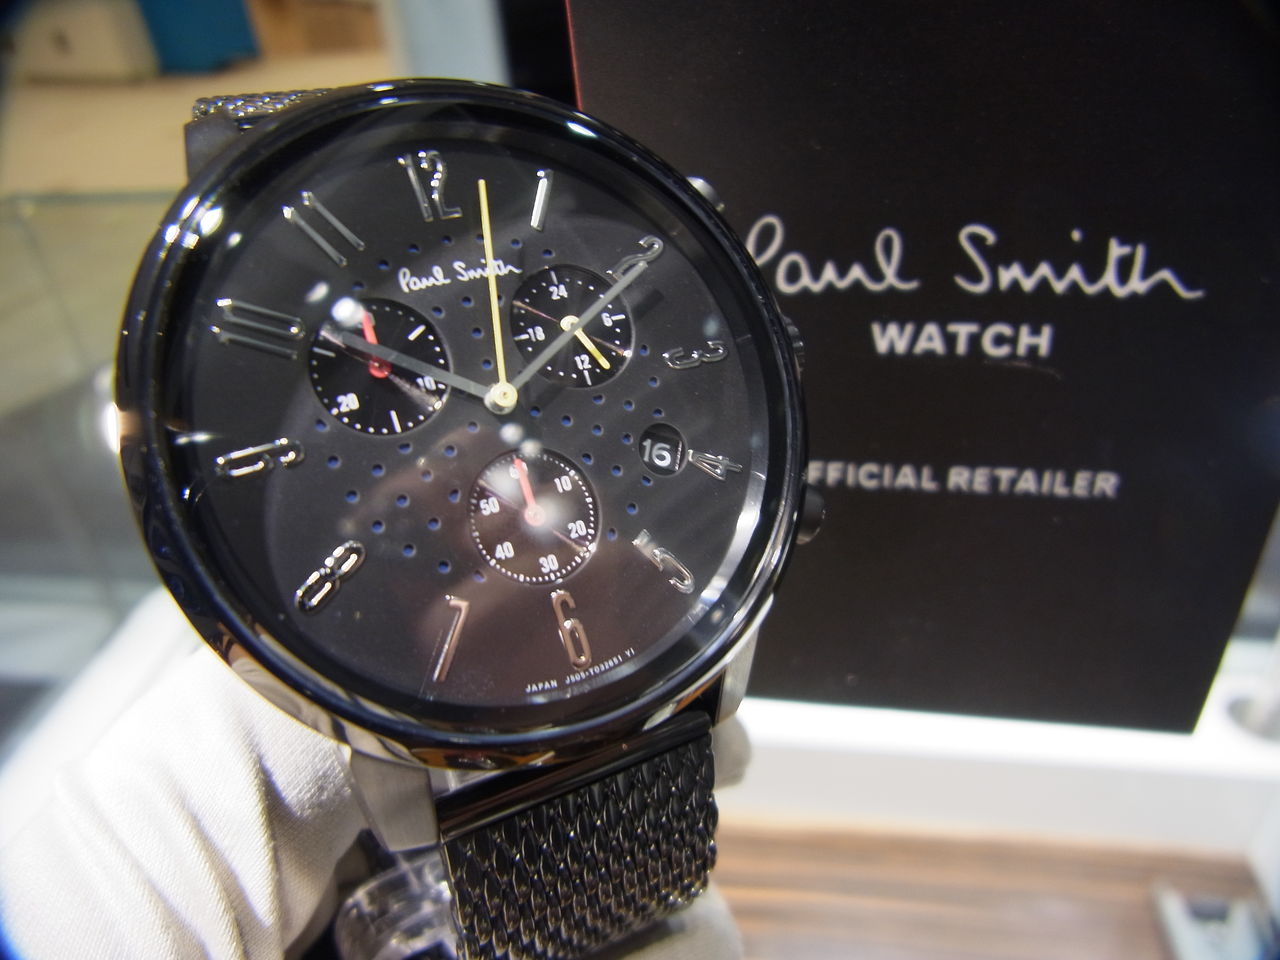 Paul Smith ポールスミス The Watch Shop のブログ